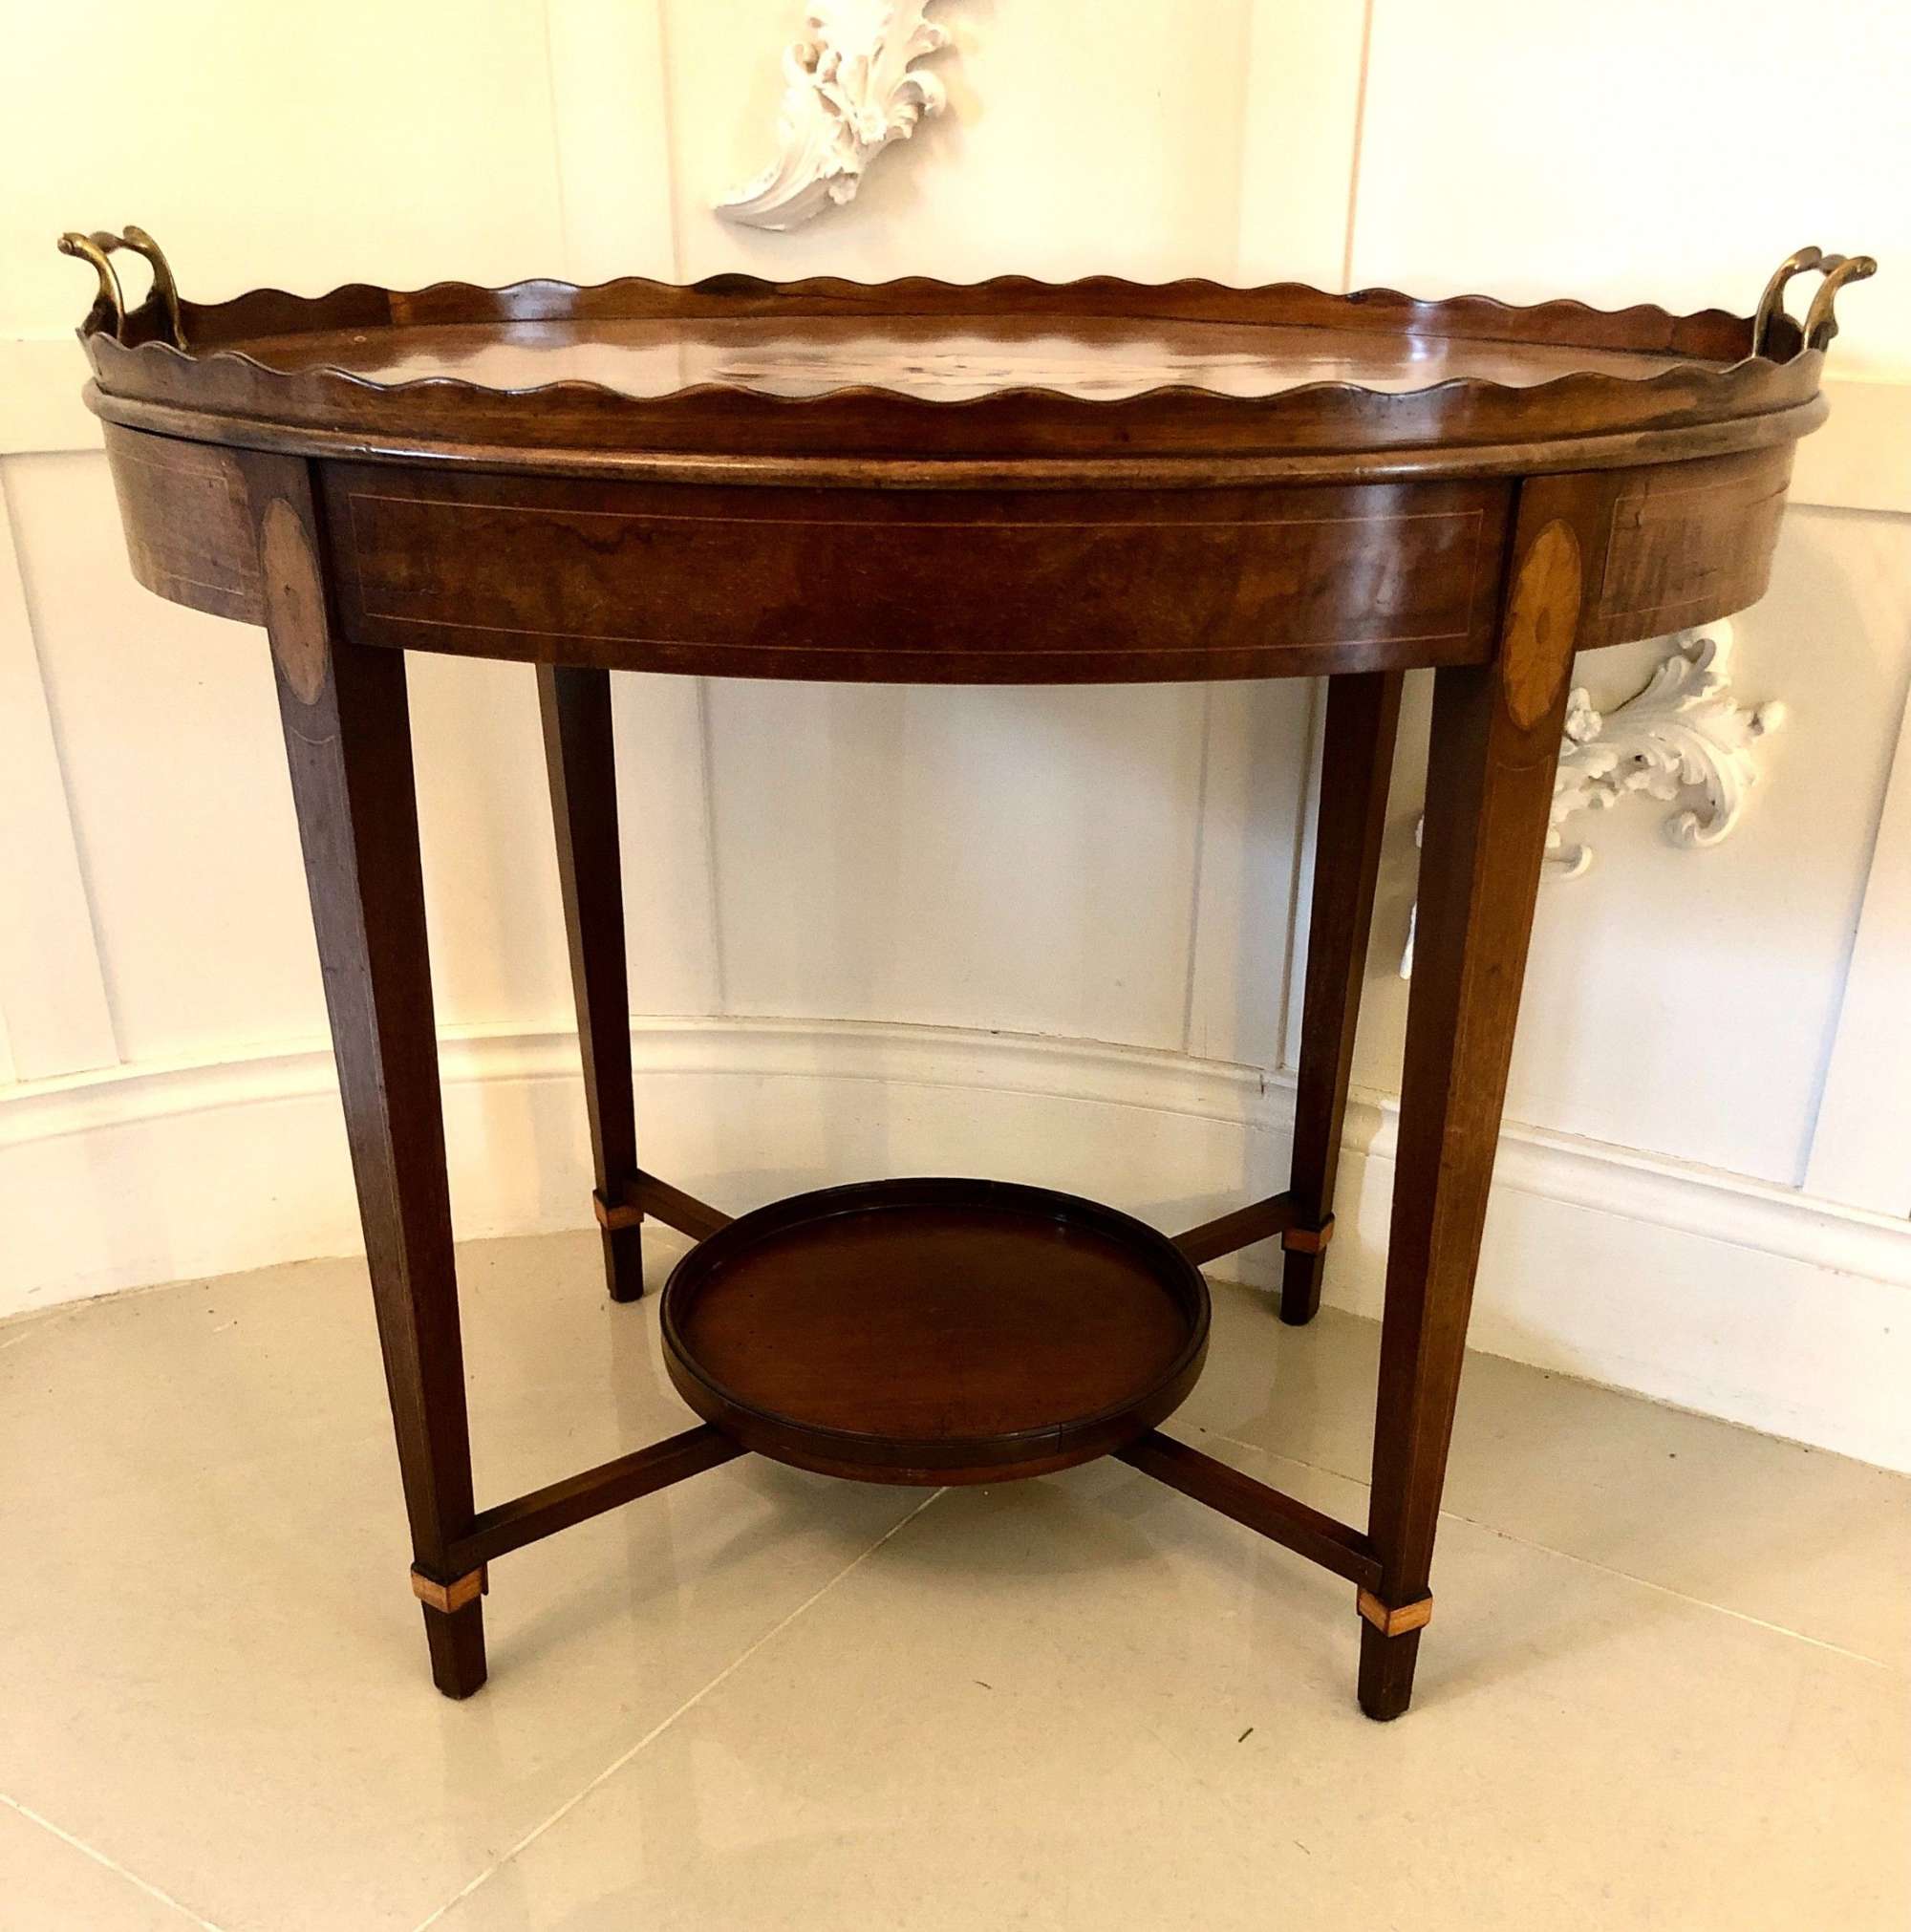 Antique Edwardian Inlaid Mahogany Oval Tray Table